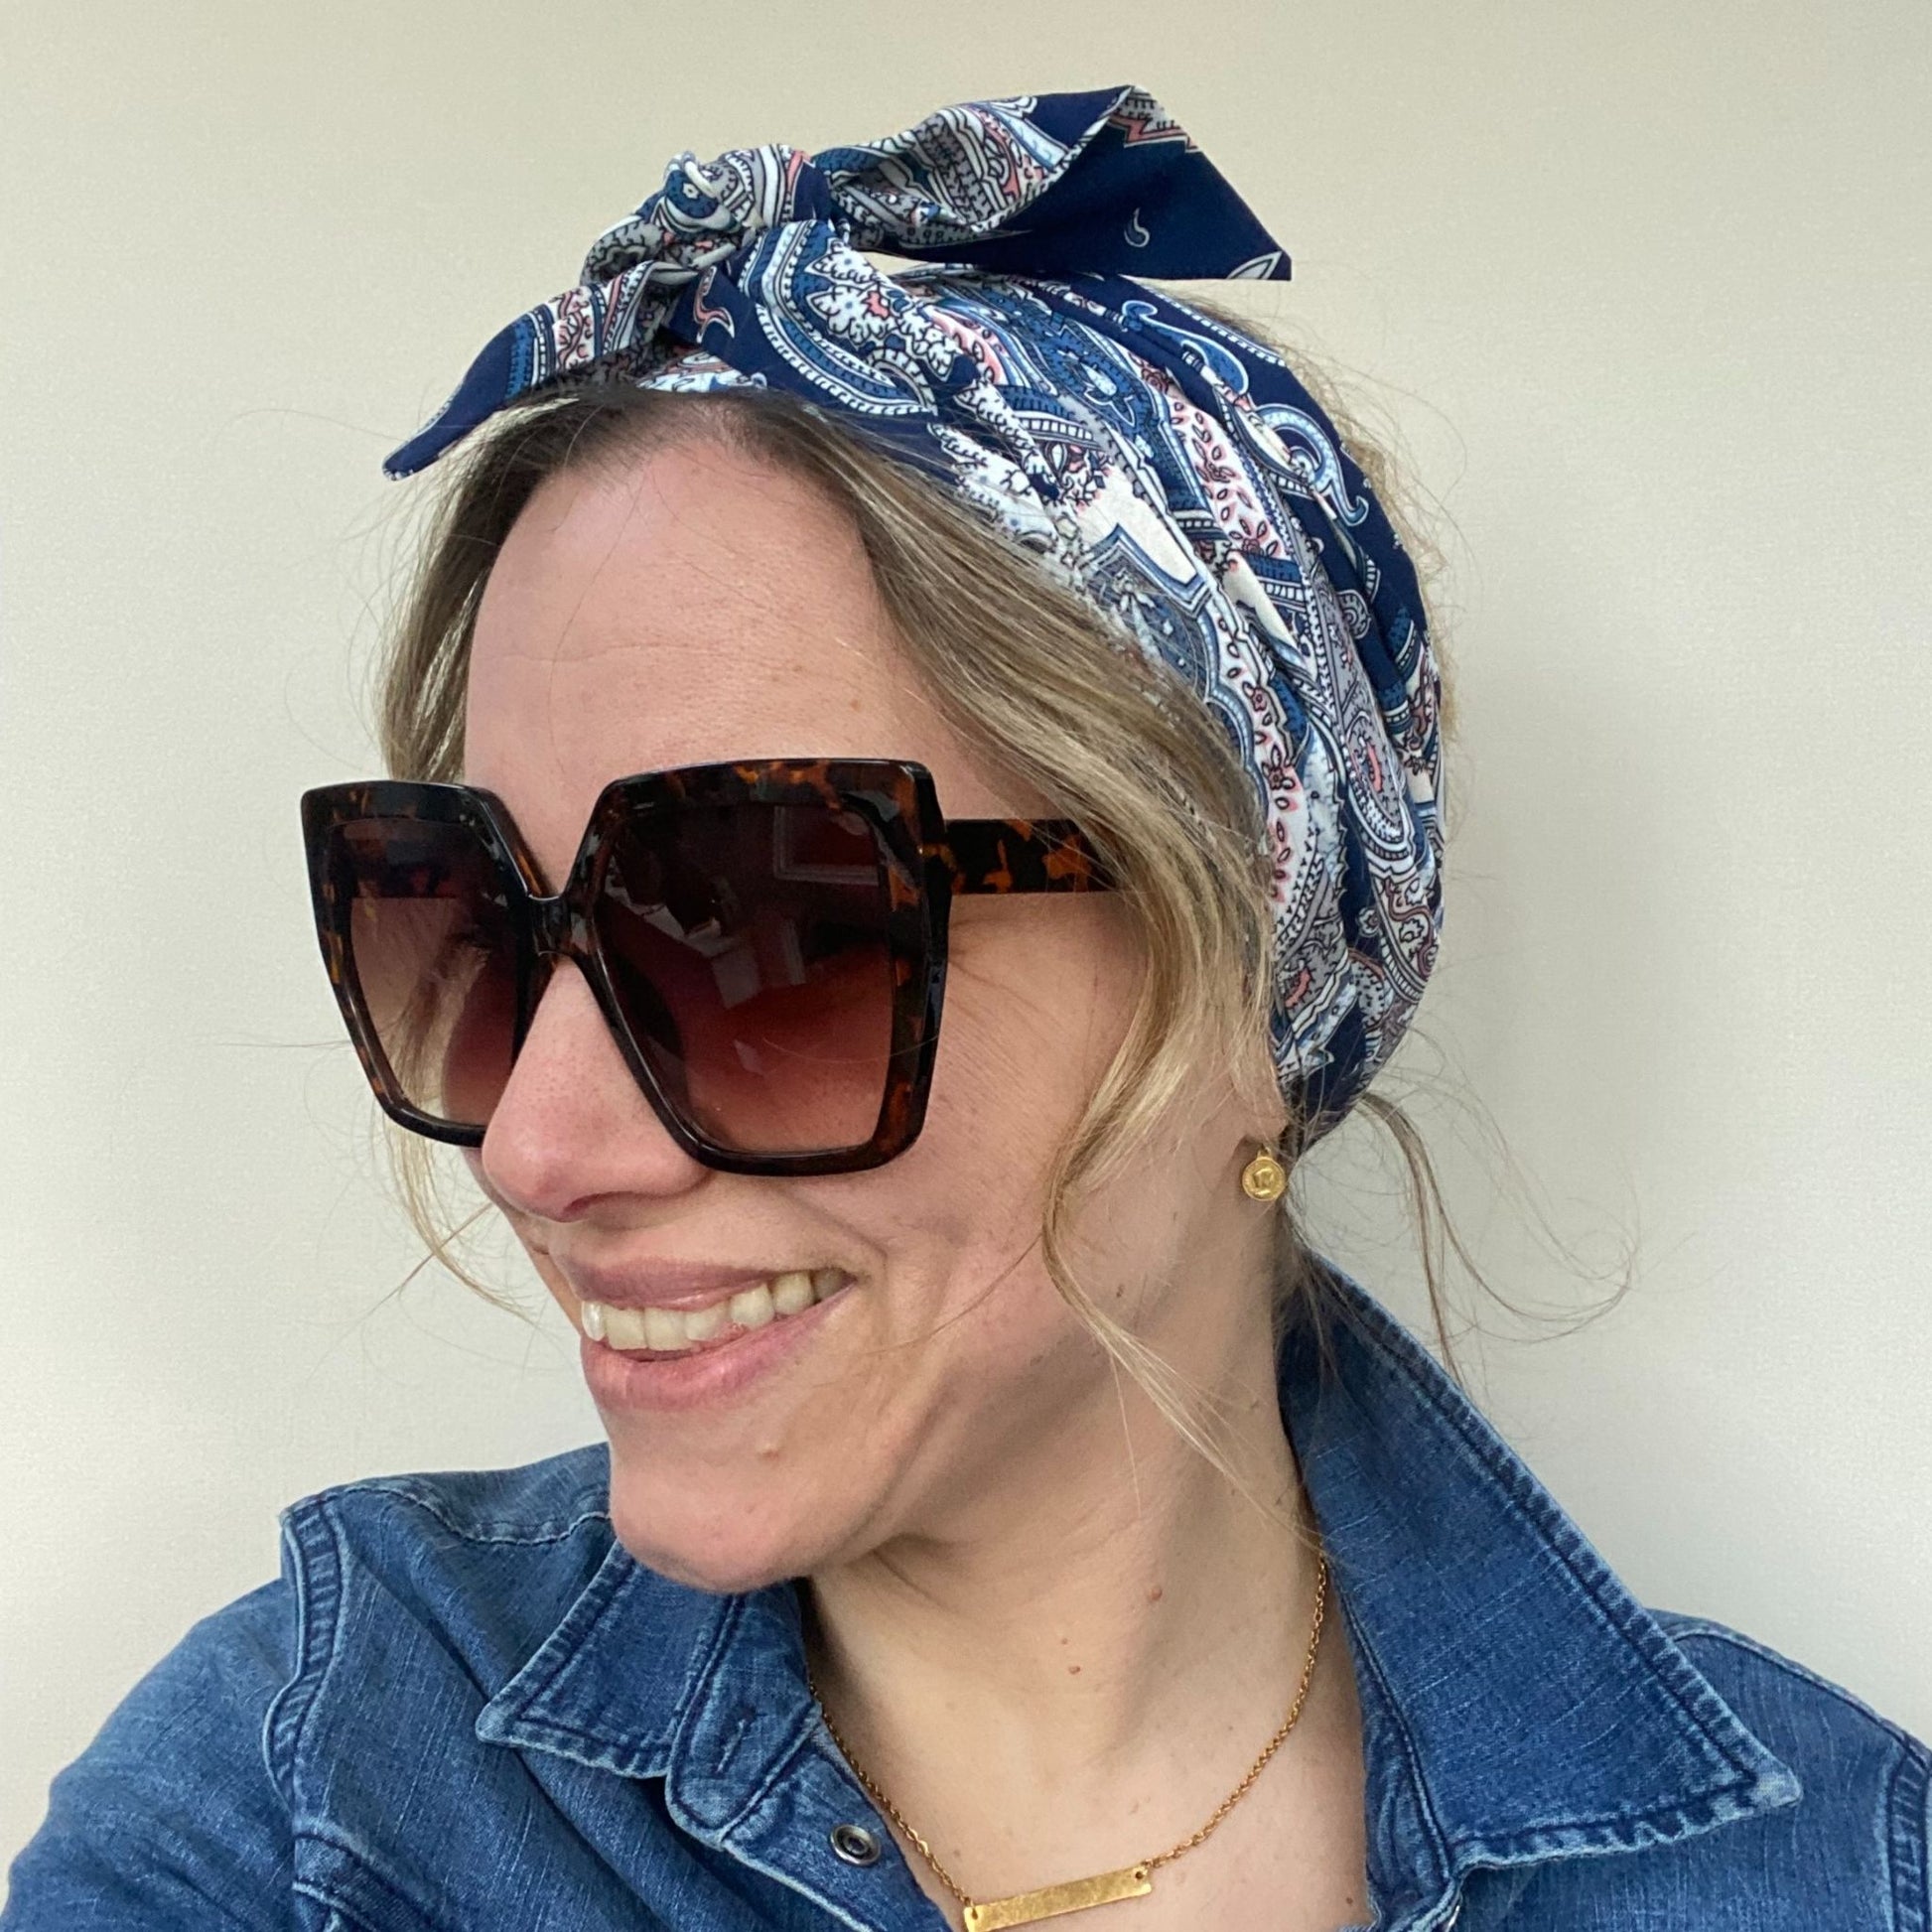 lady wearing paisley headscarf and sunglasses